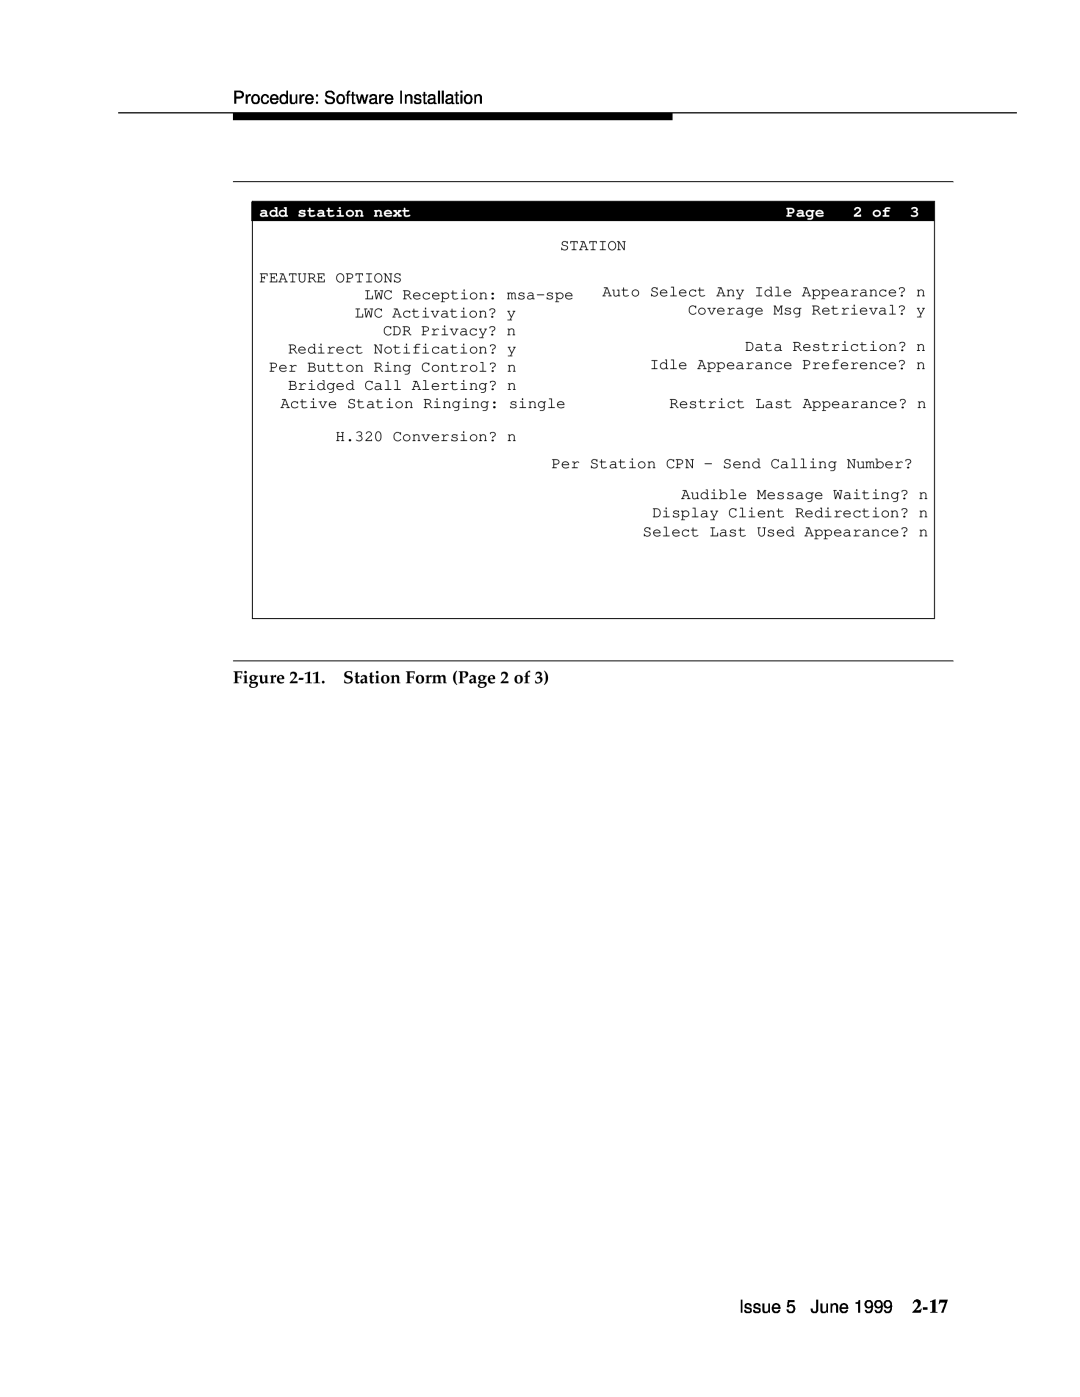 Lucent Technologies 555-232-102 11. Station Form, Procedure Software Installation, Issue 5 June 1999, add station next 